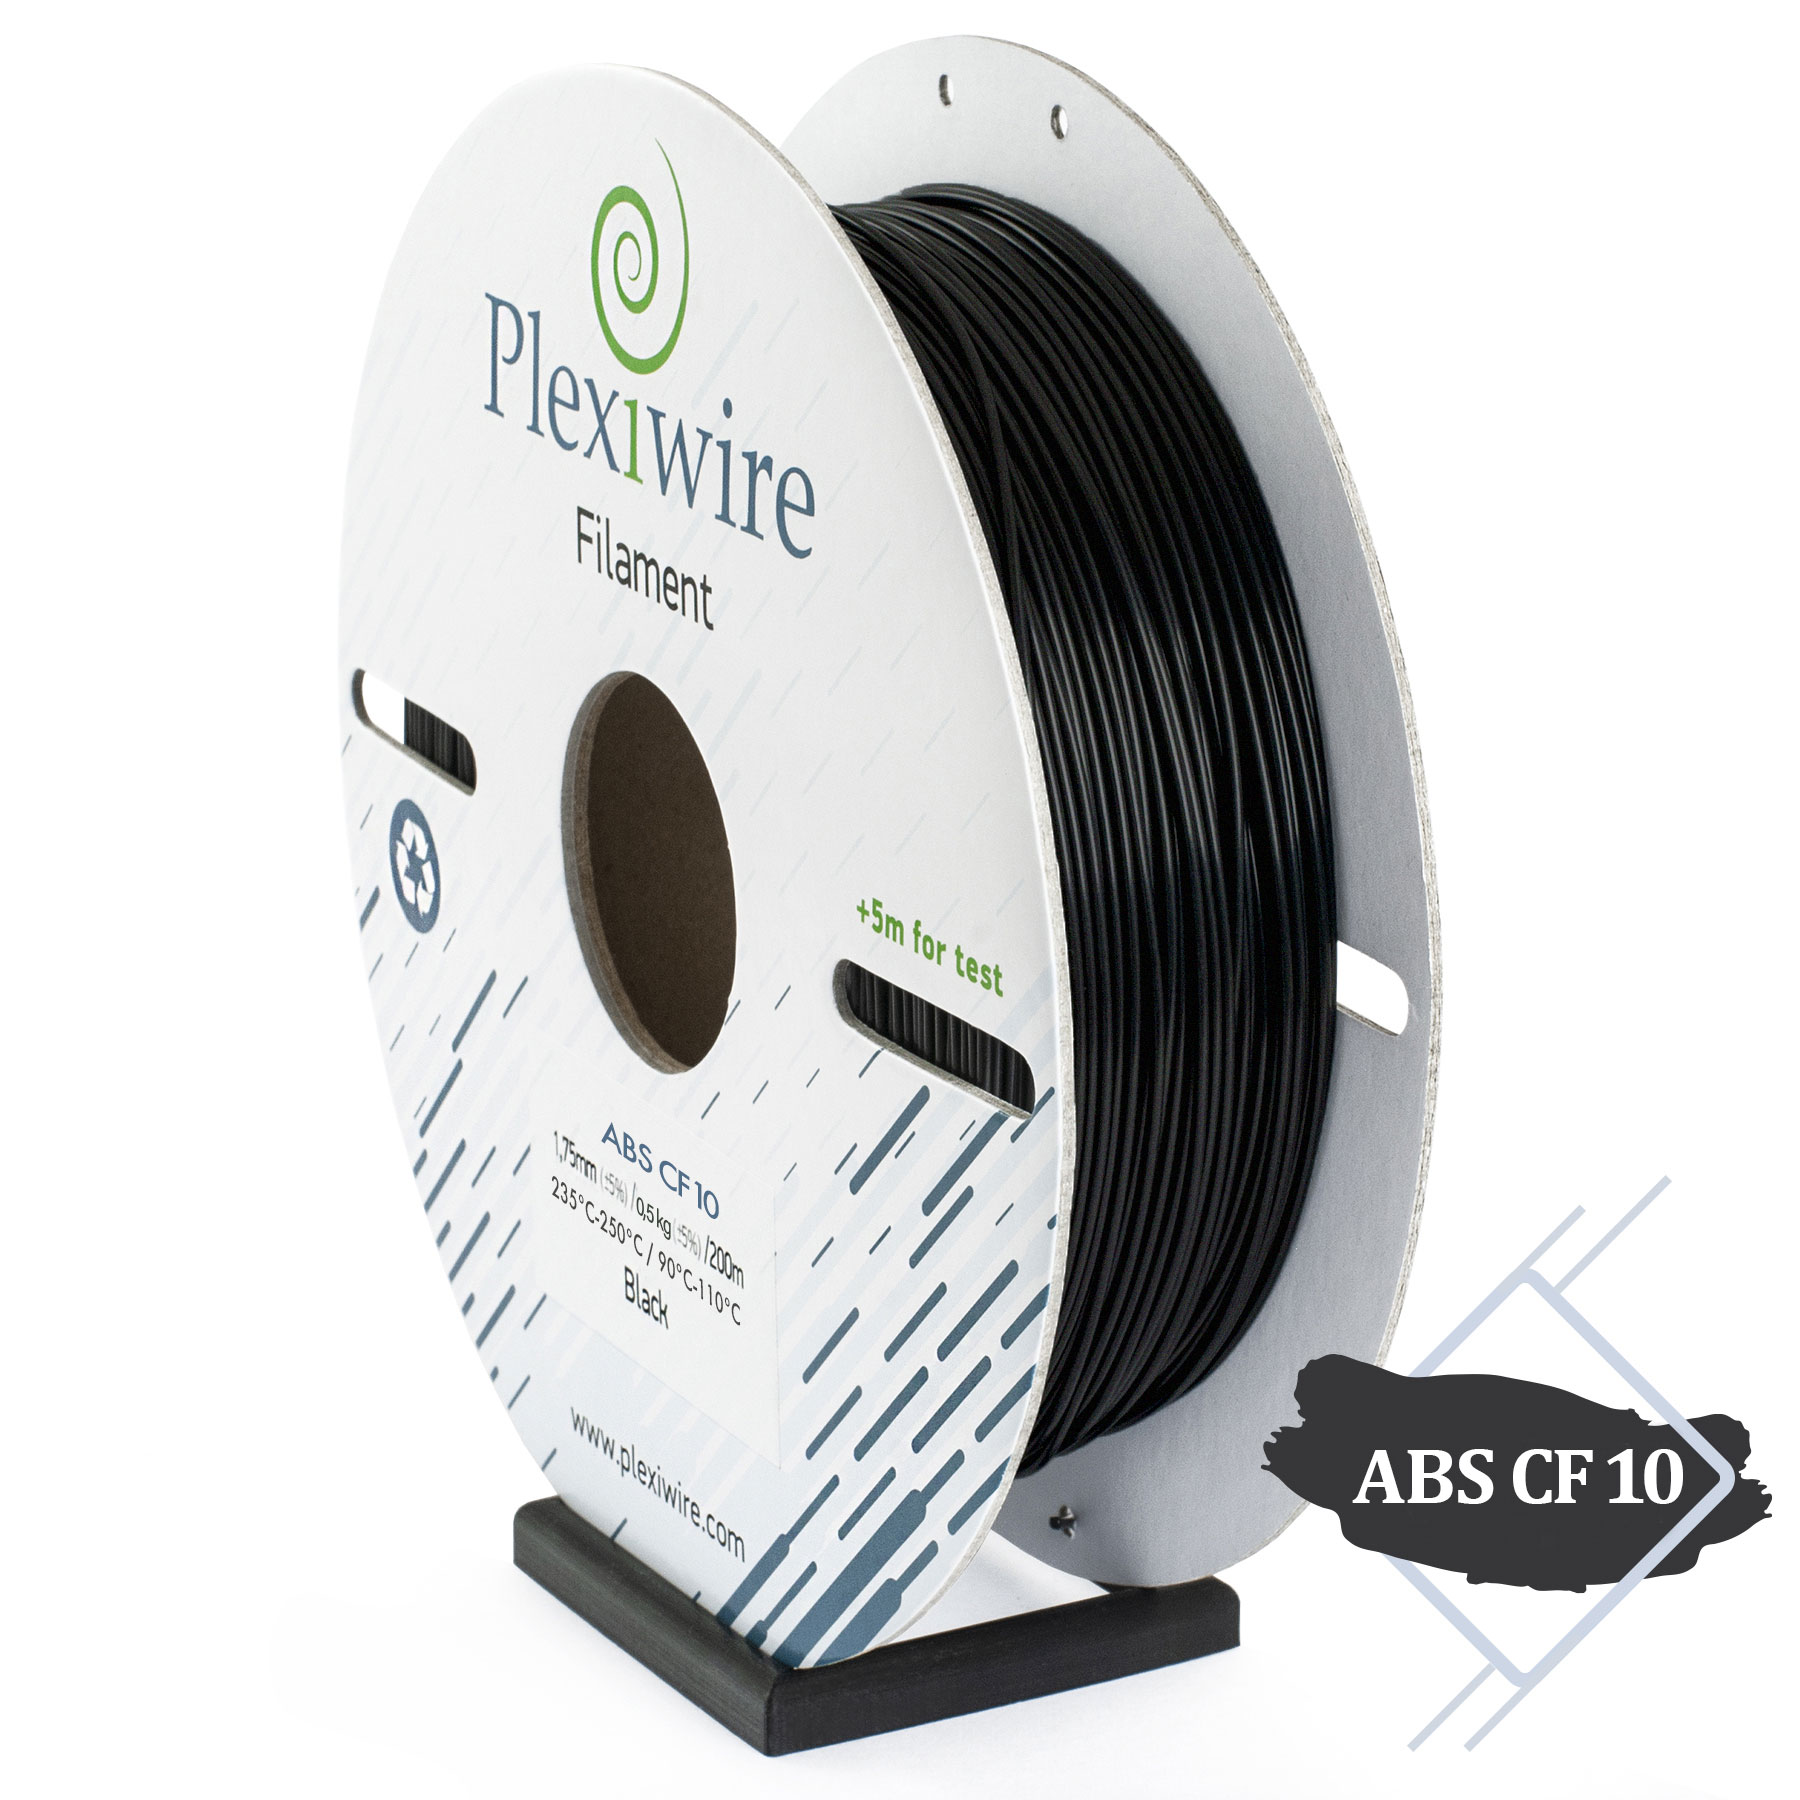 Plexiwire filament ABS CF10